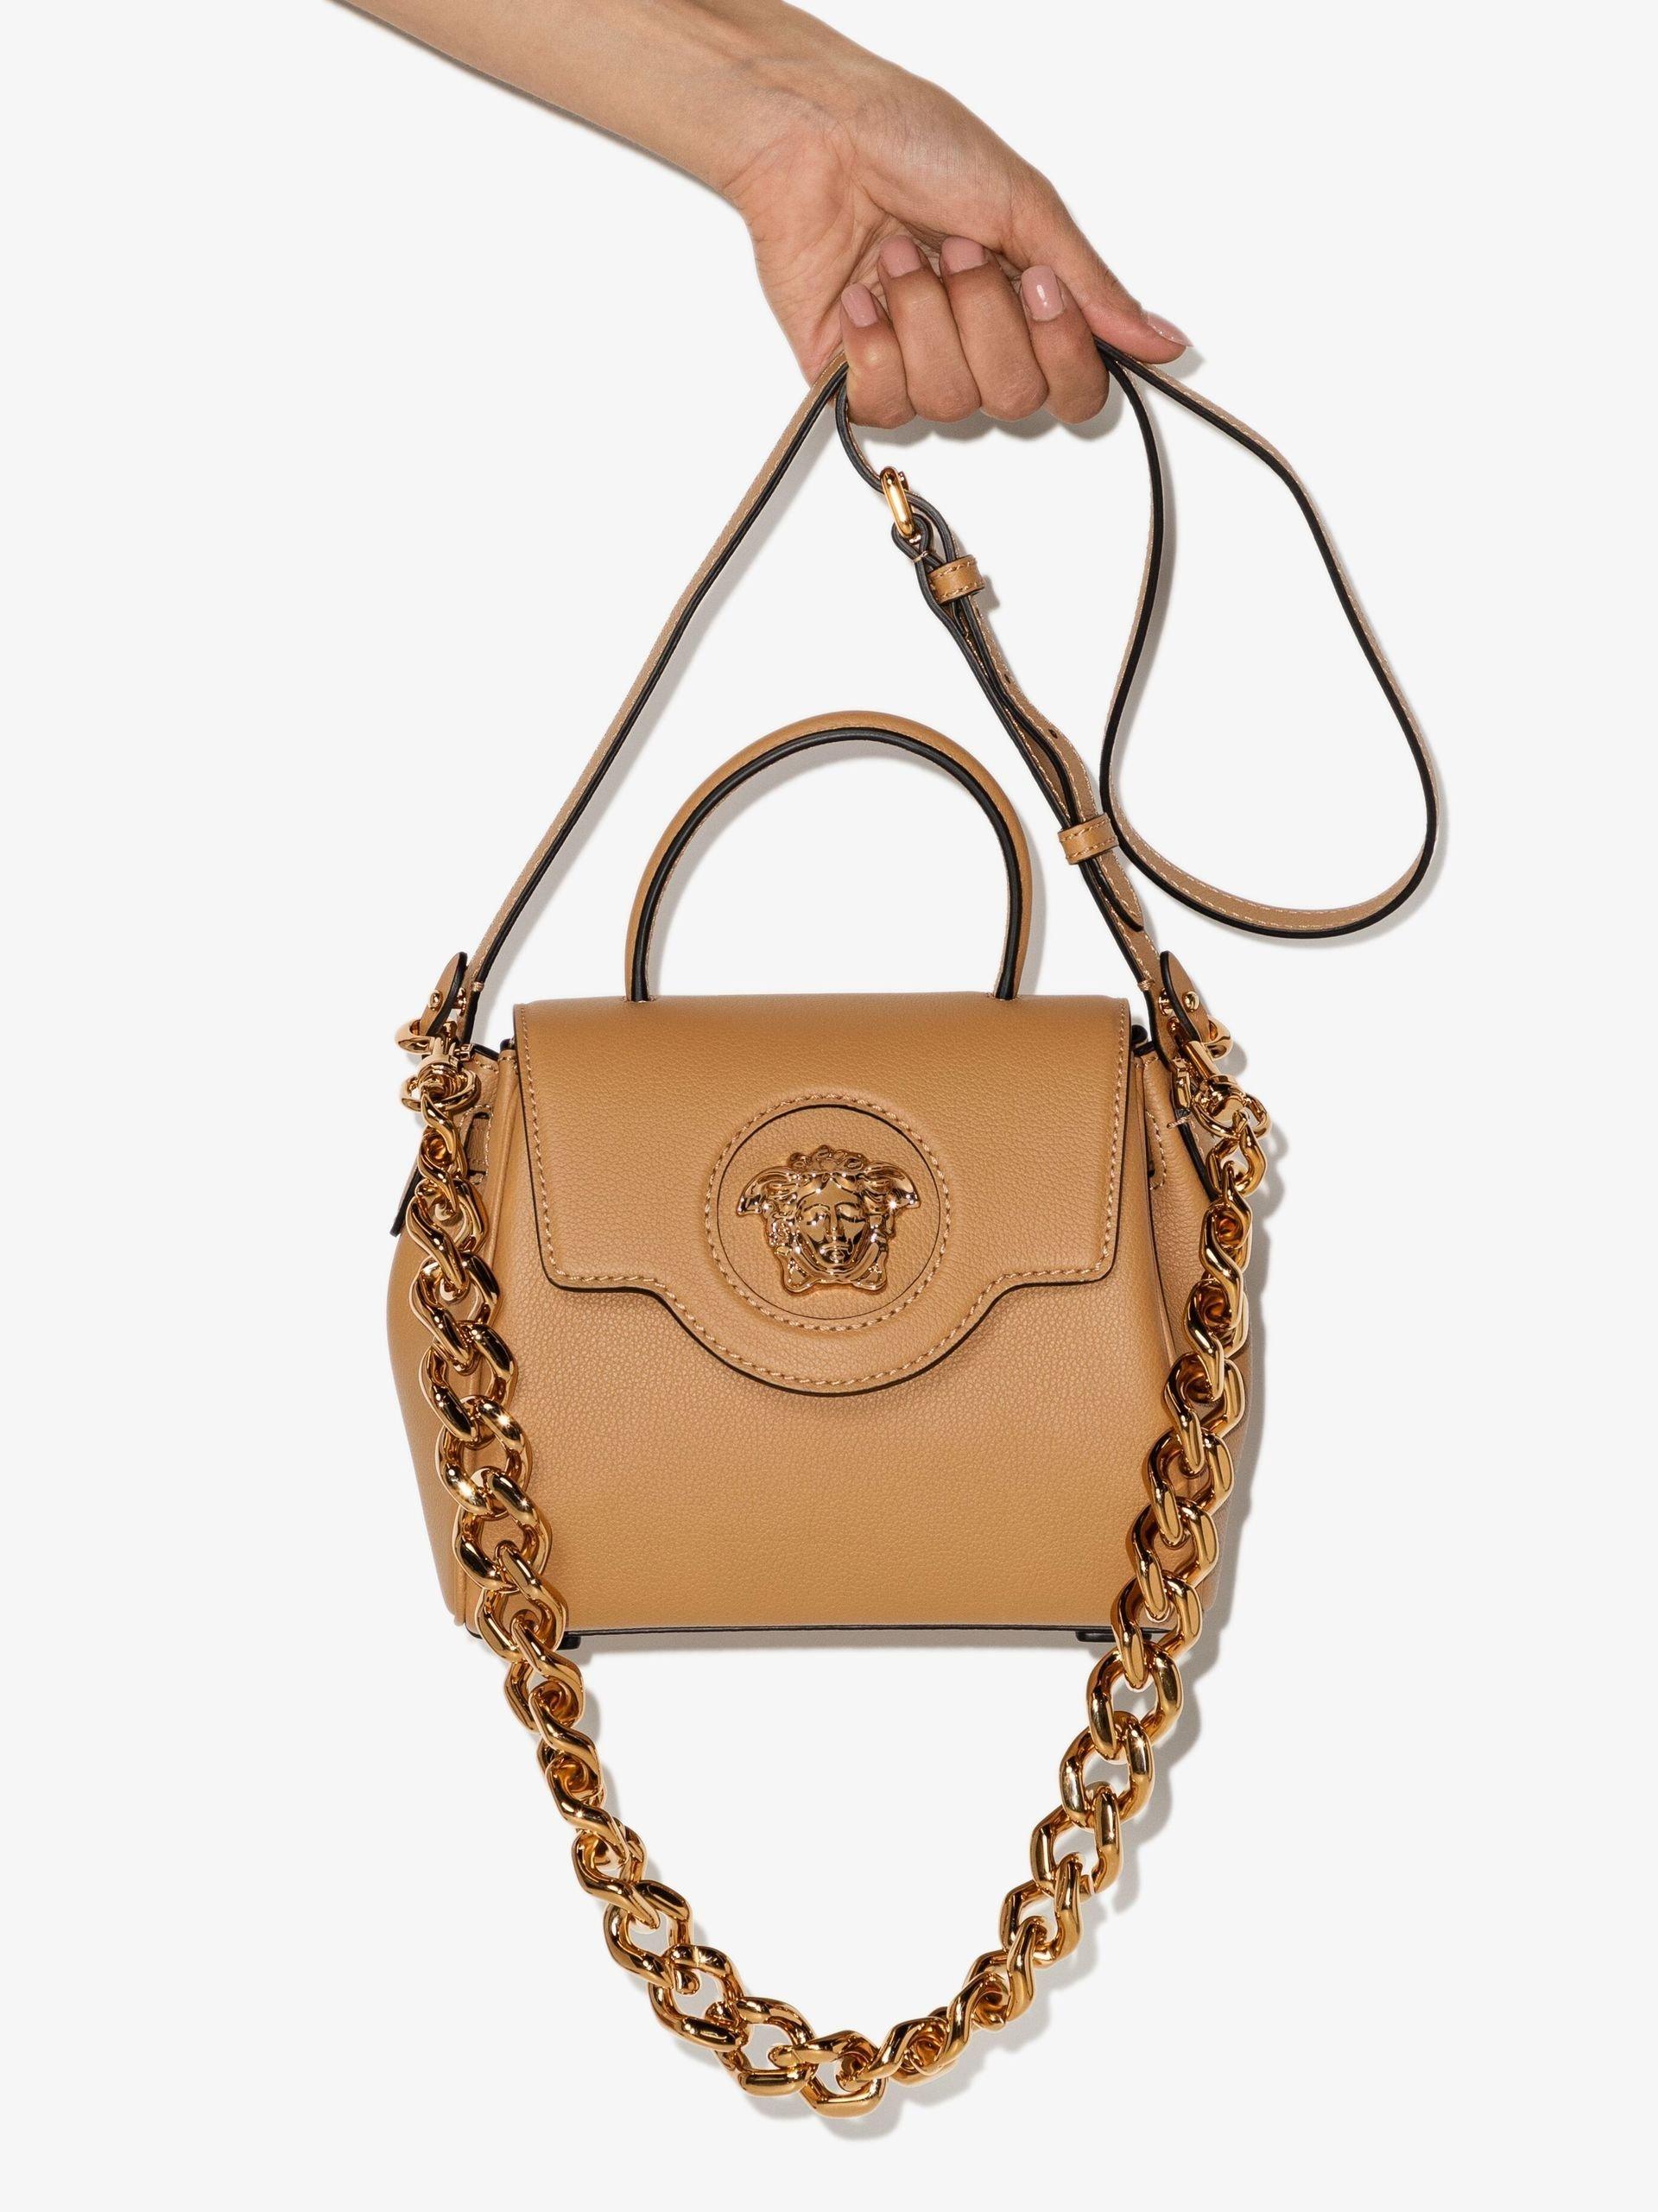 Versace La Medusa Small Leather Shoulder Bag in Metallic